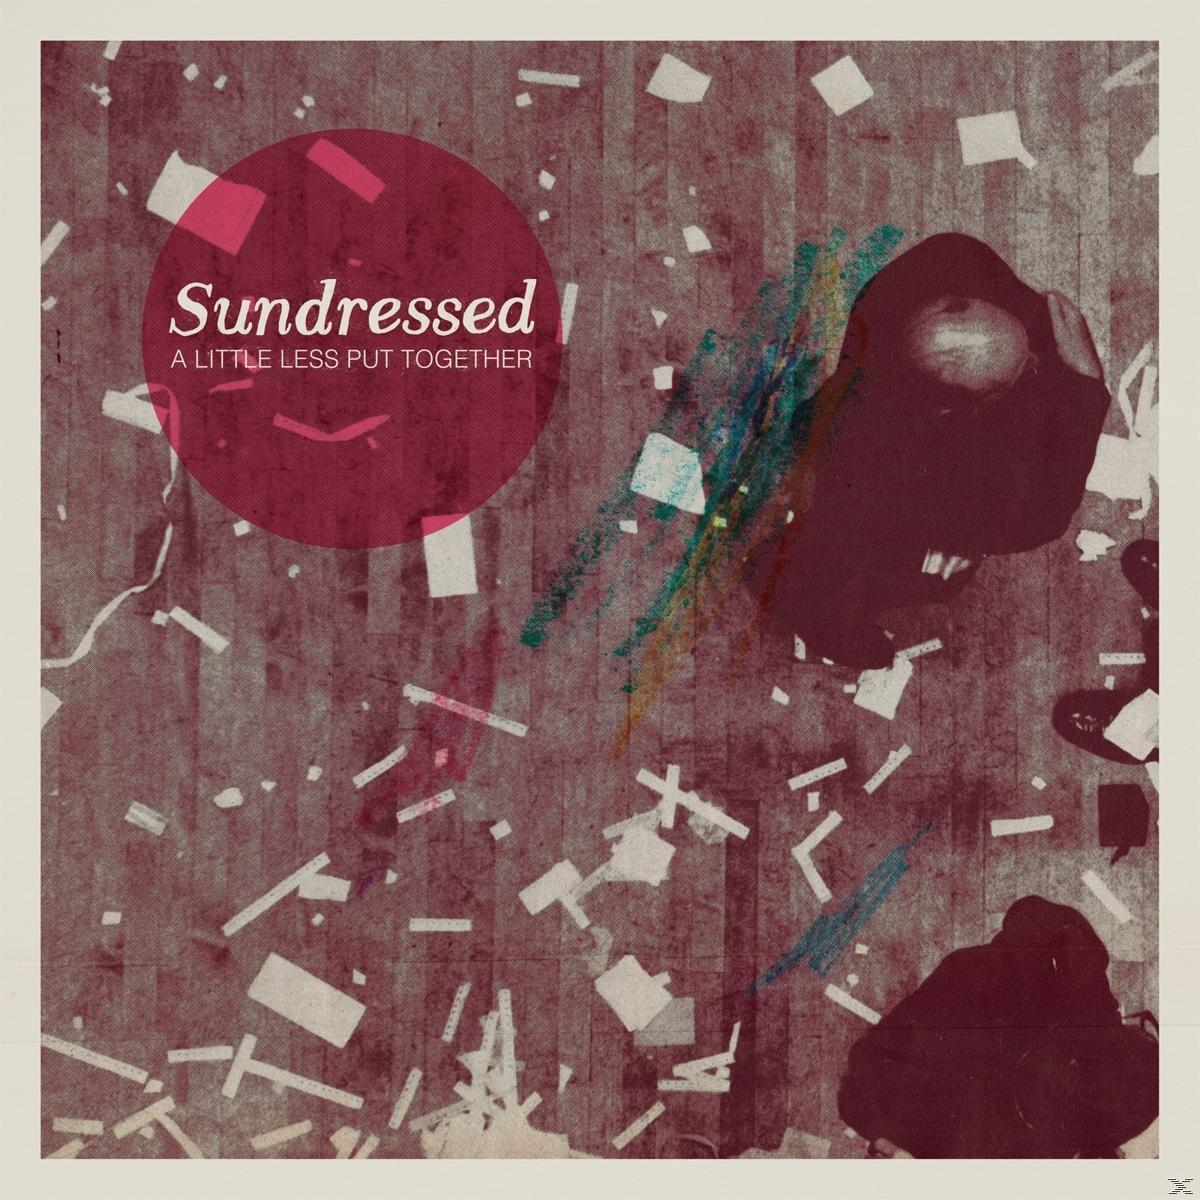 - Sundressed (CD) LESS LITTLE TOGETHER A - PUT